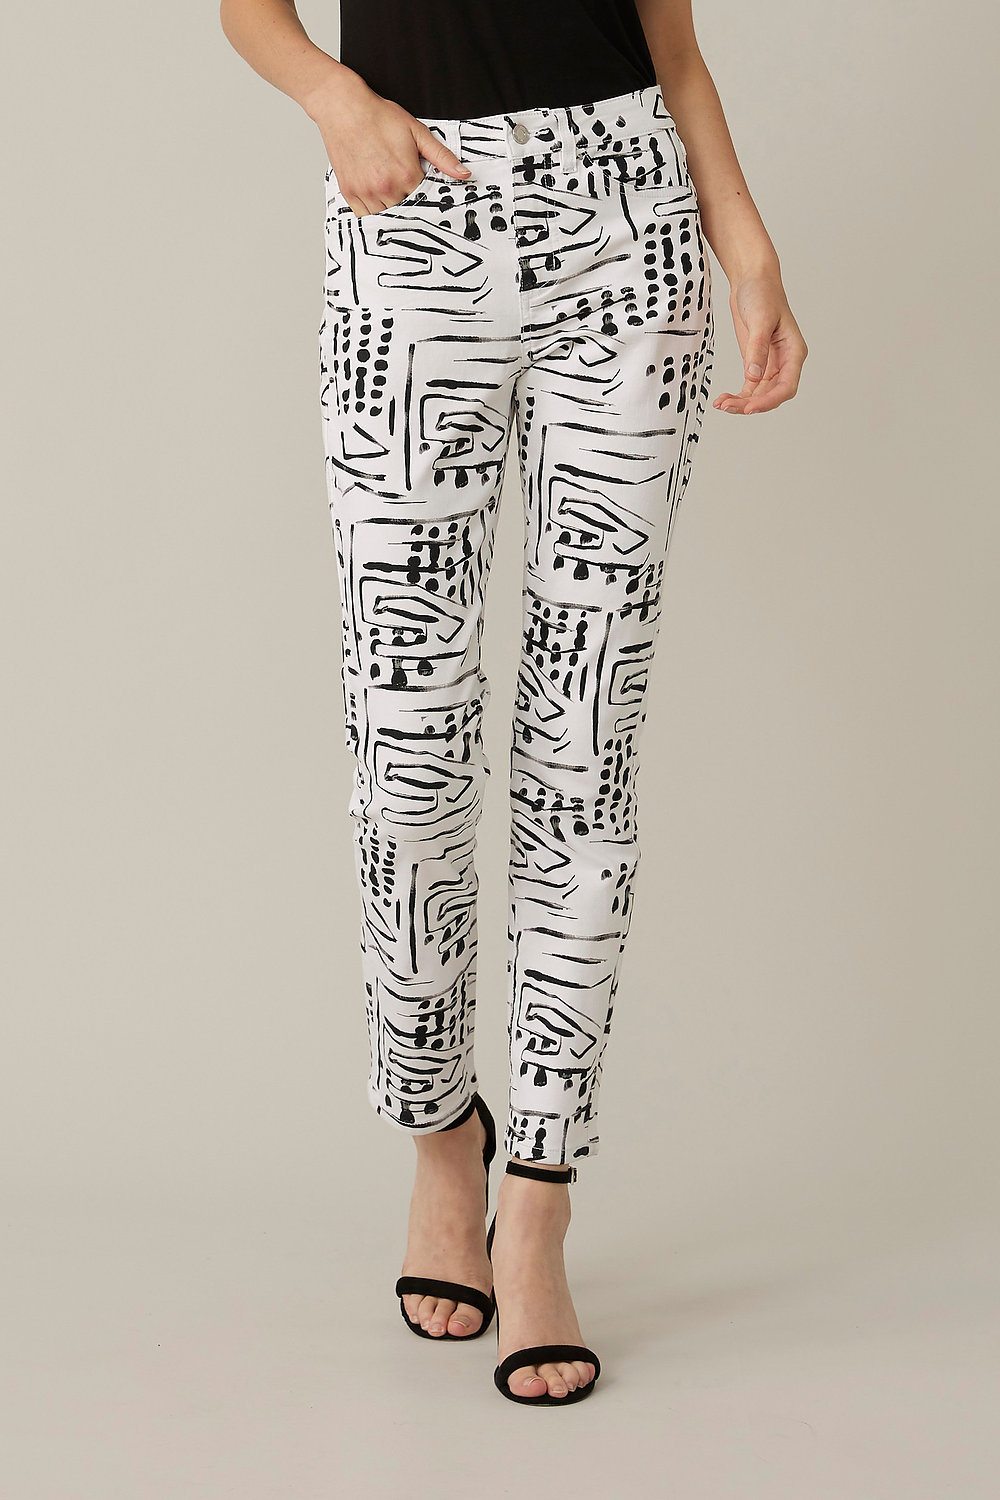 Joseph Ribkoff Abstract Print Jeans Style 221925. White/black